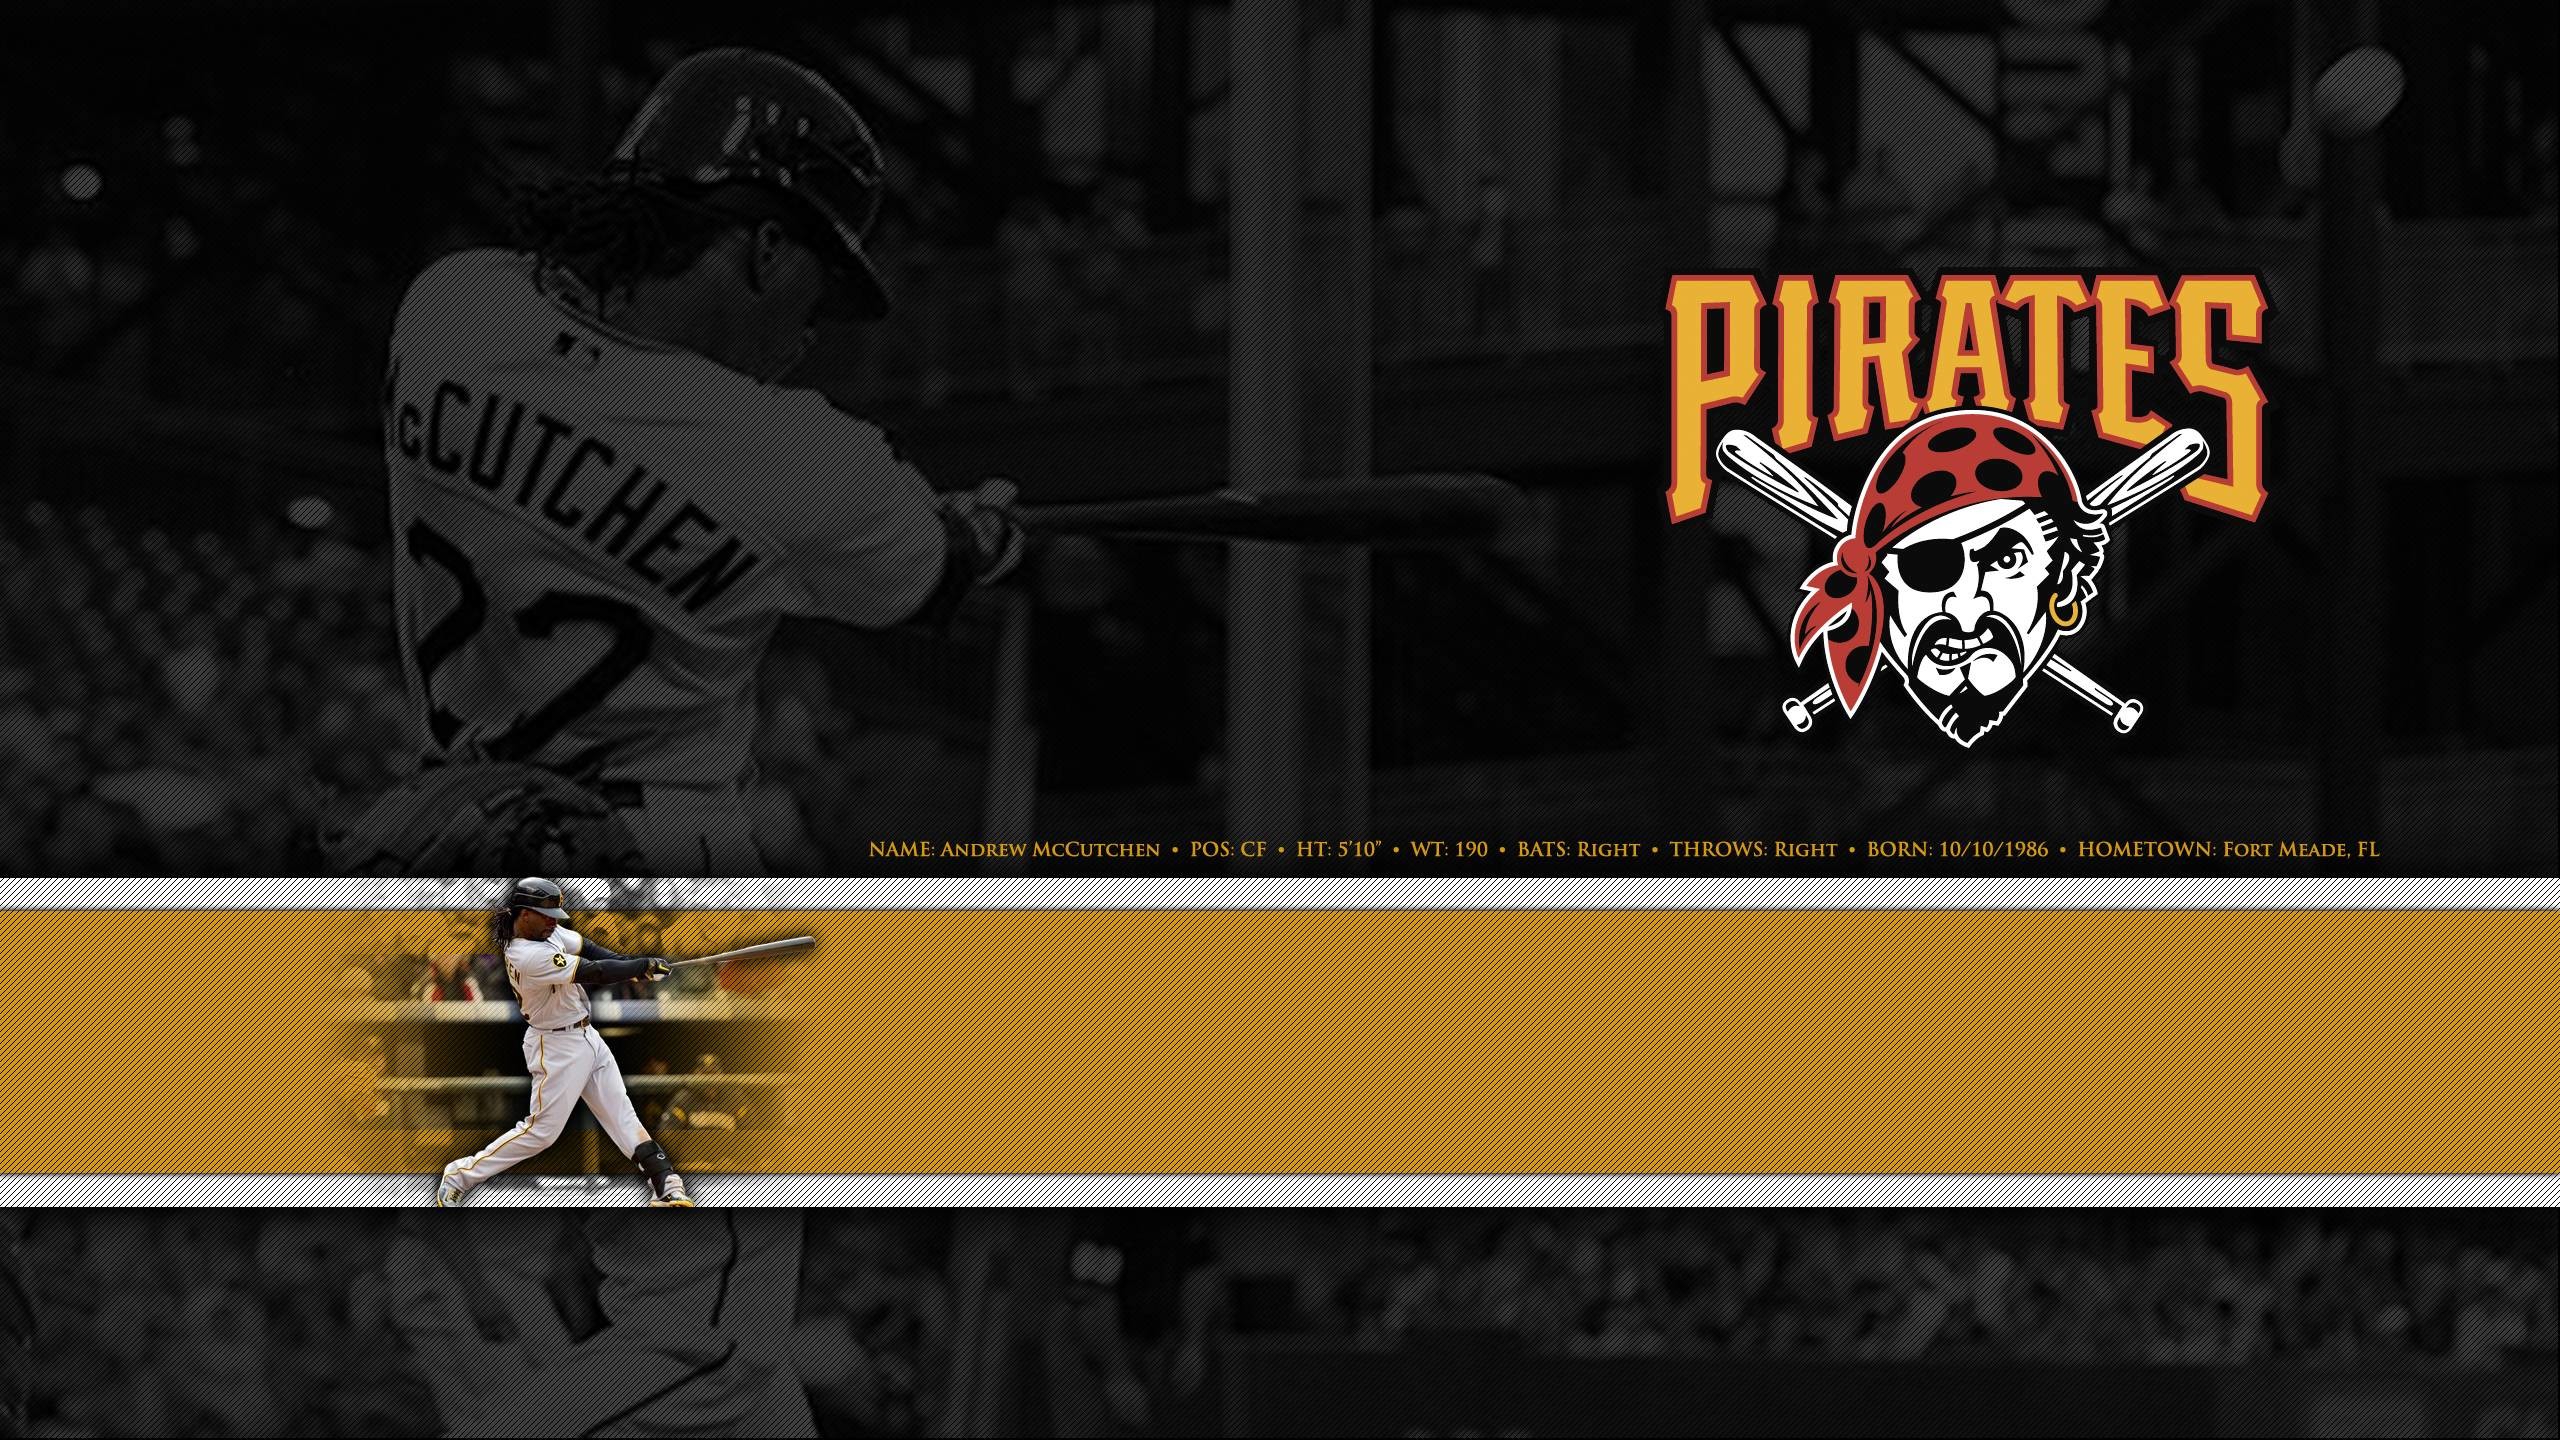 2560x1440 Pittsburgh Pirates Desktop Background.